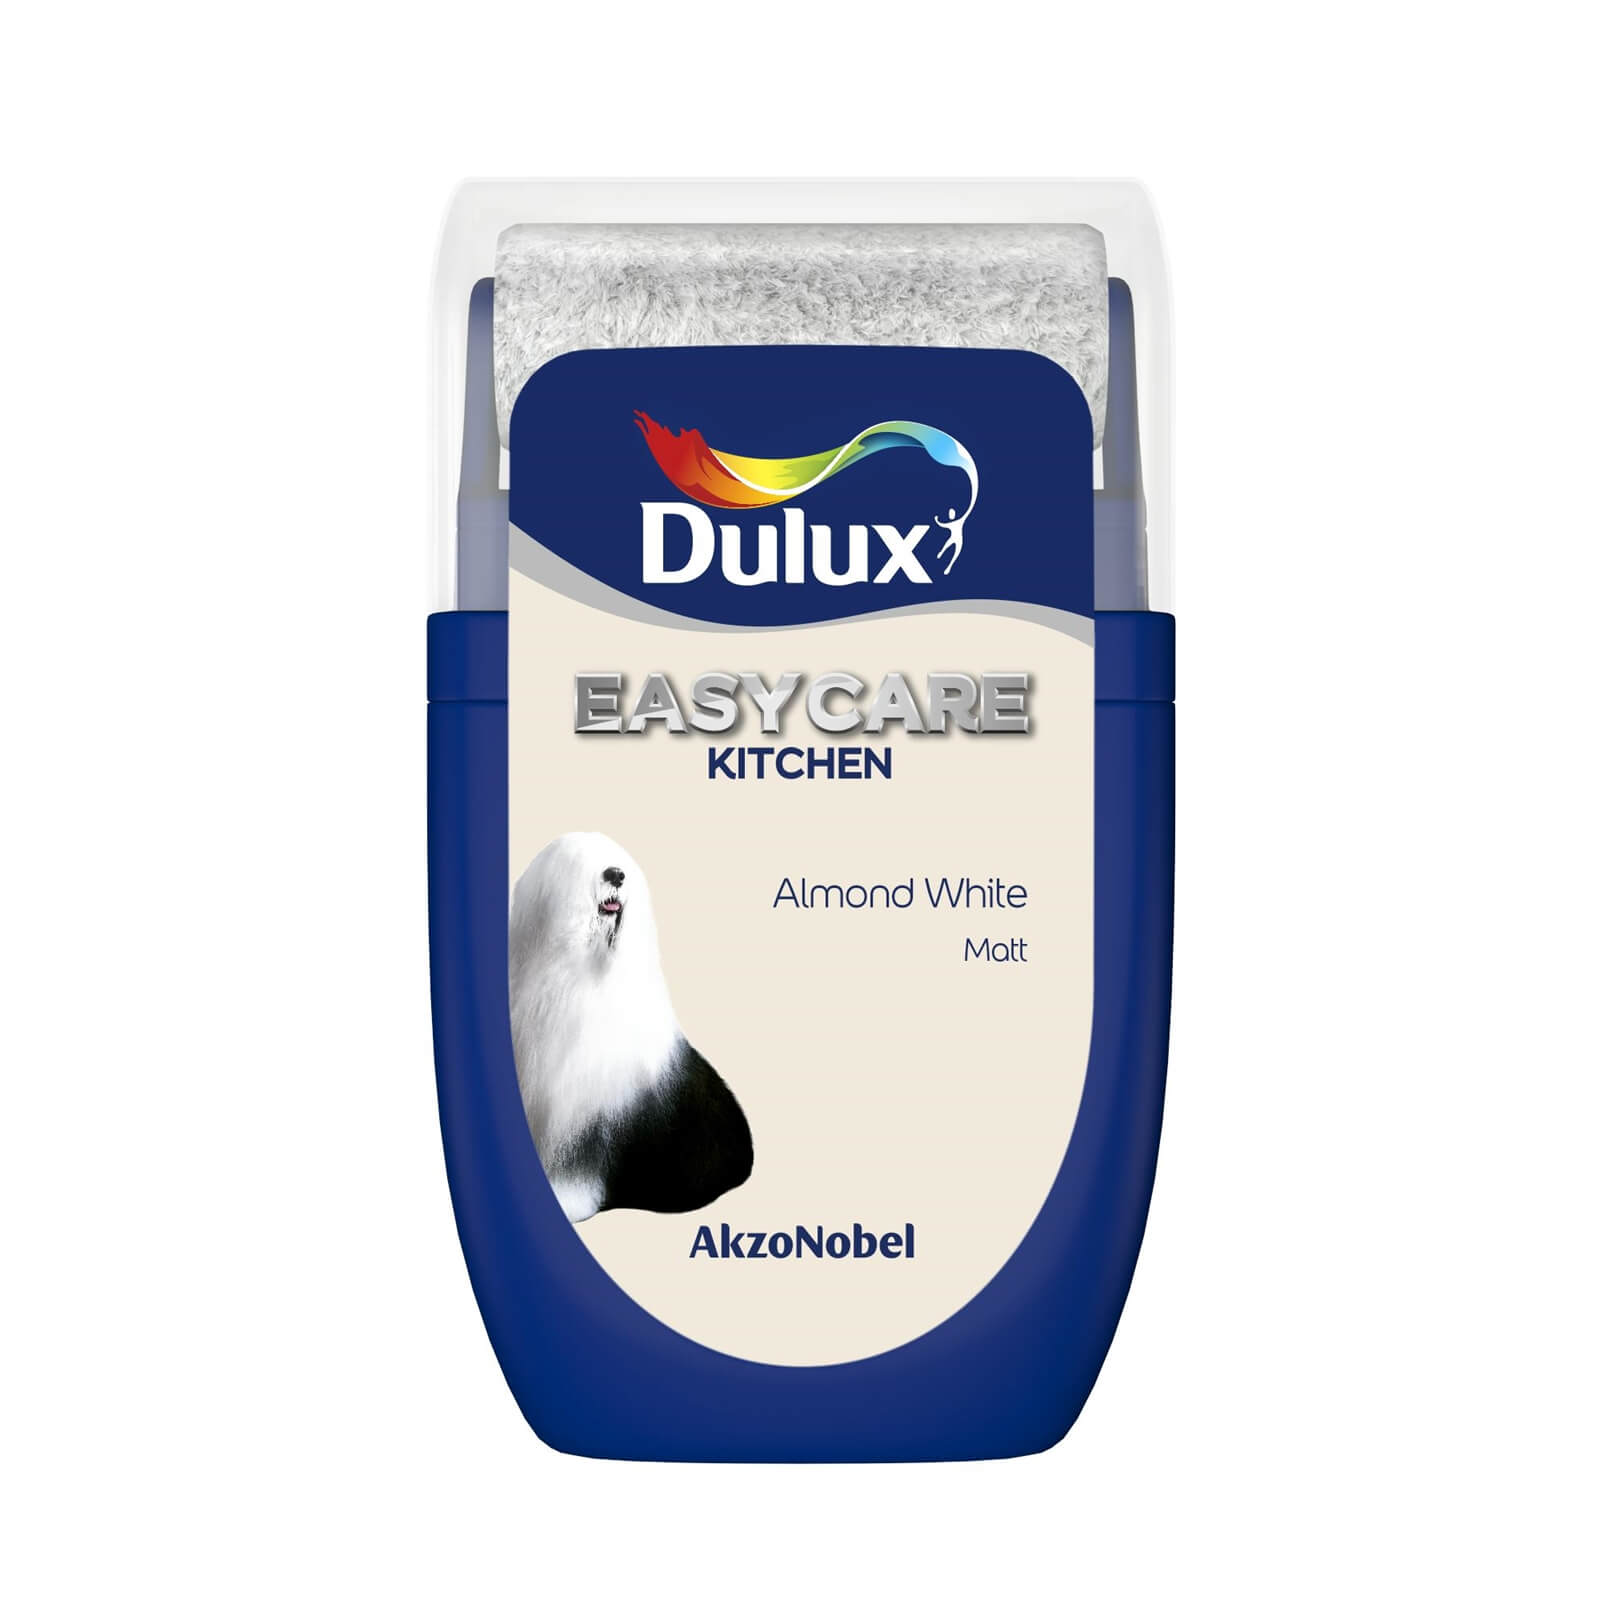 Dulux Easycare Kitchen Almond White Tester Paint - 30ml